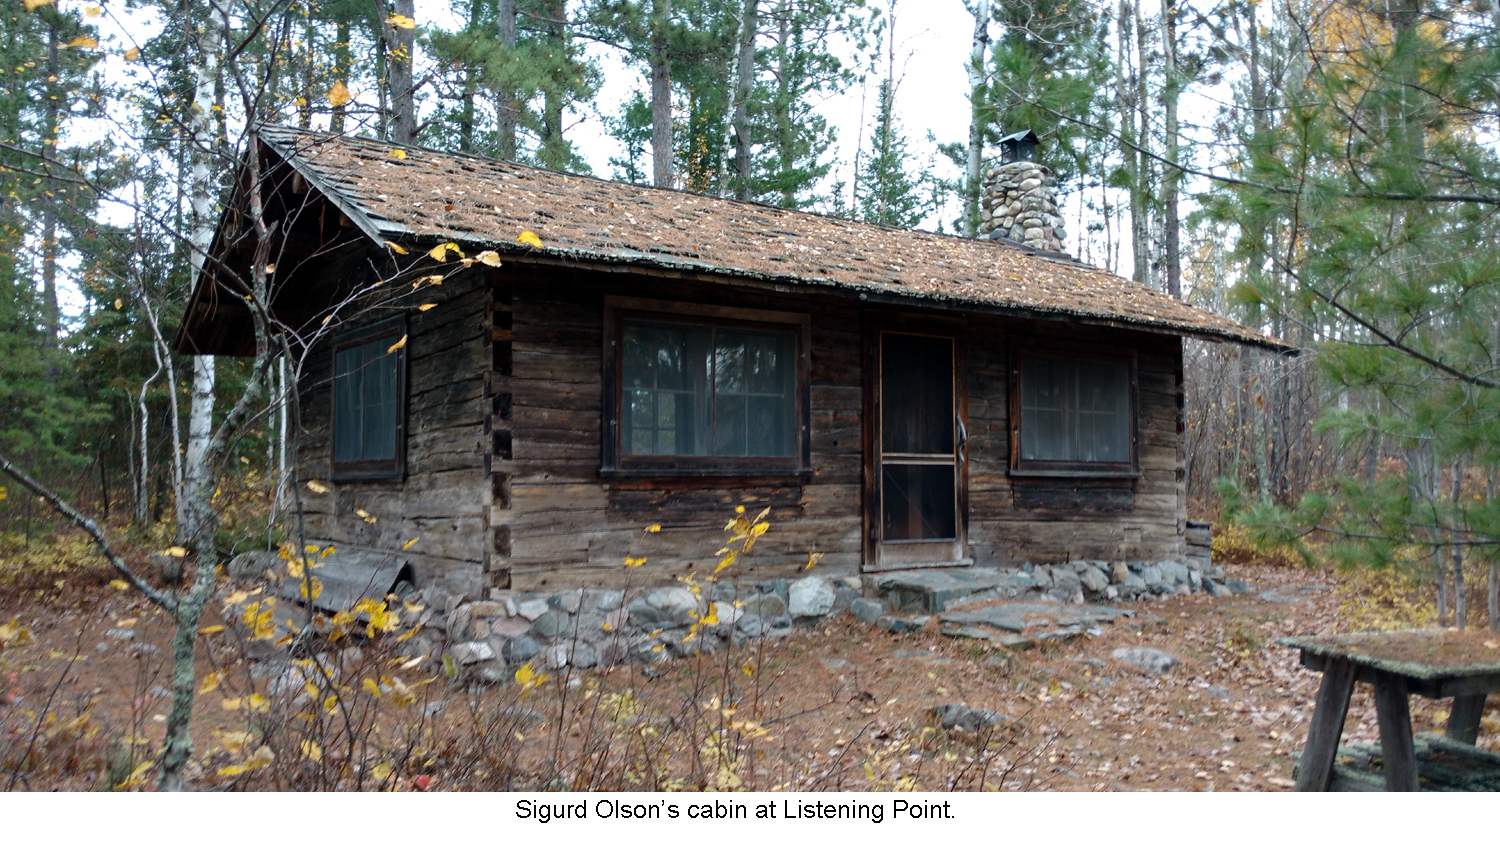 Sigurd Olson’s cabin at Listening Point